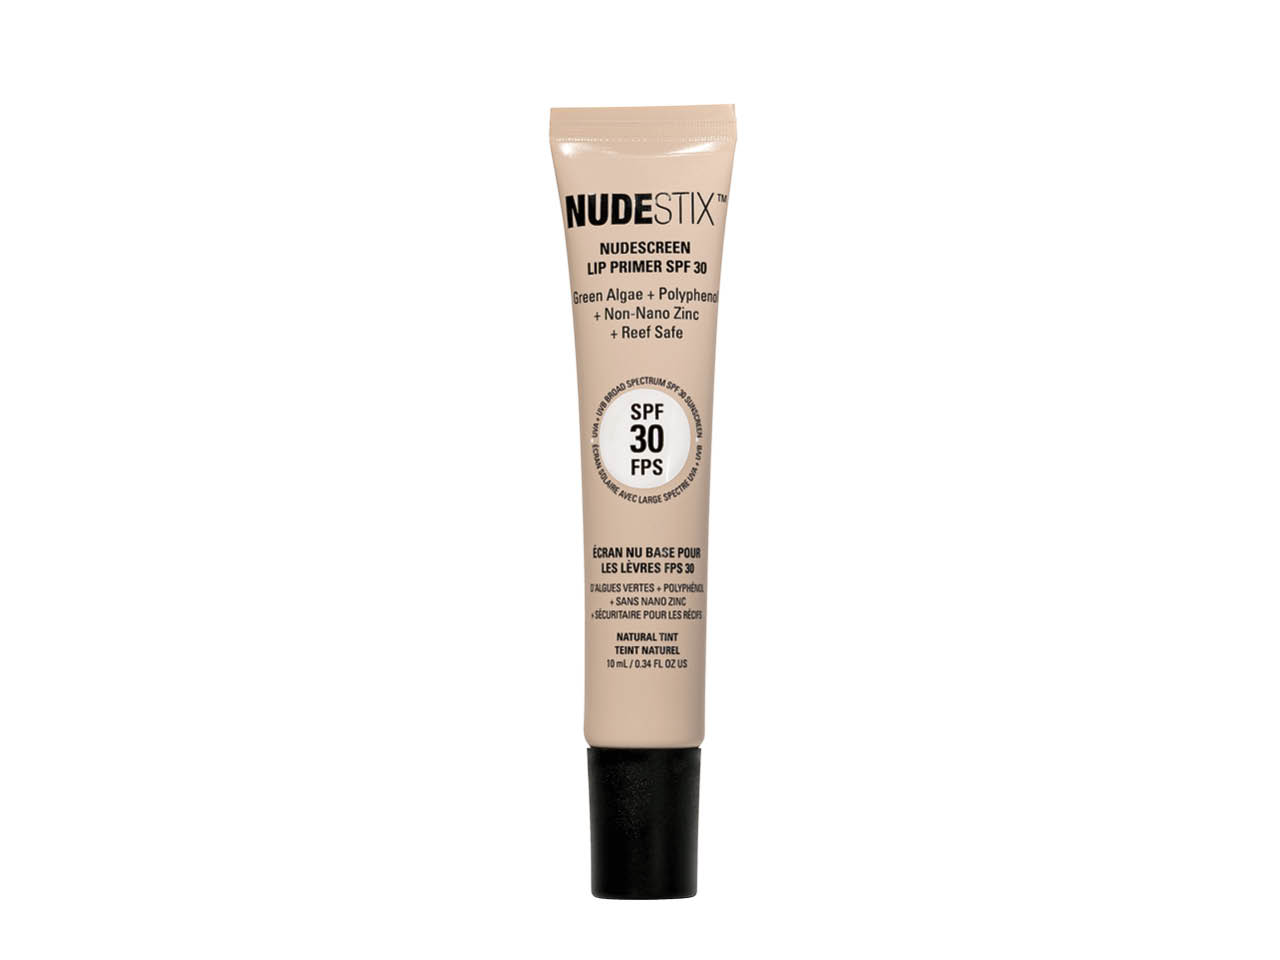 A beige lip balm tube with a black cap of Nudestix Nudescreen Lip Primer with sunscreen.